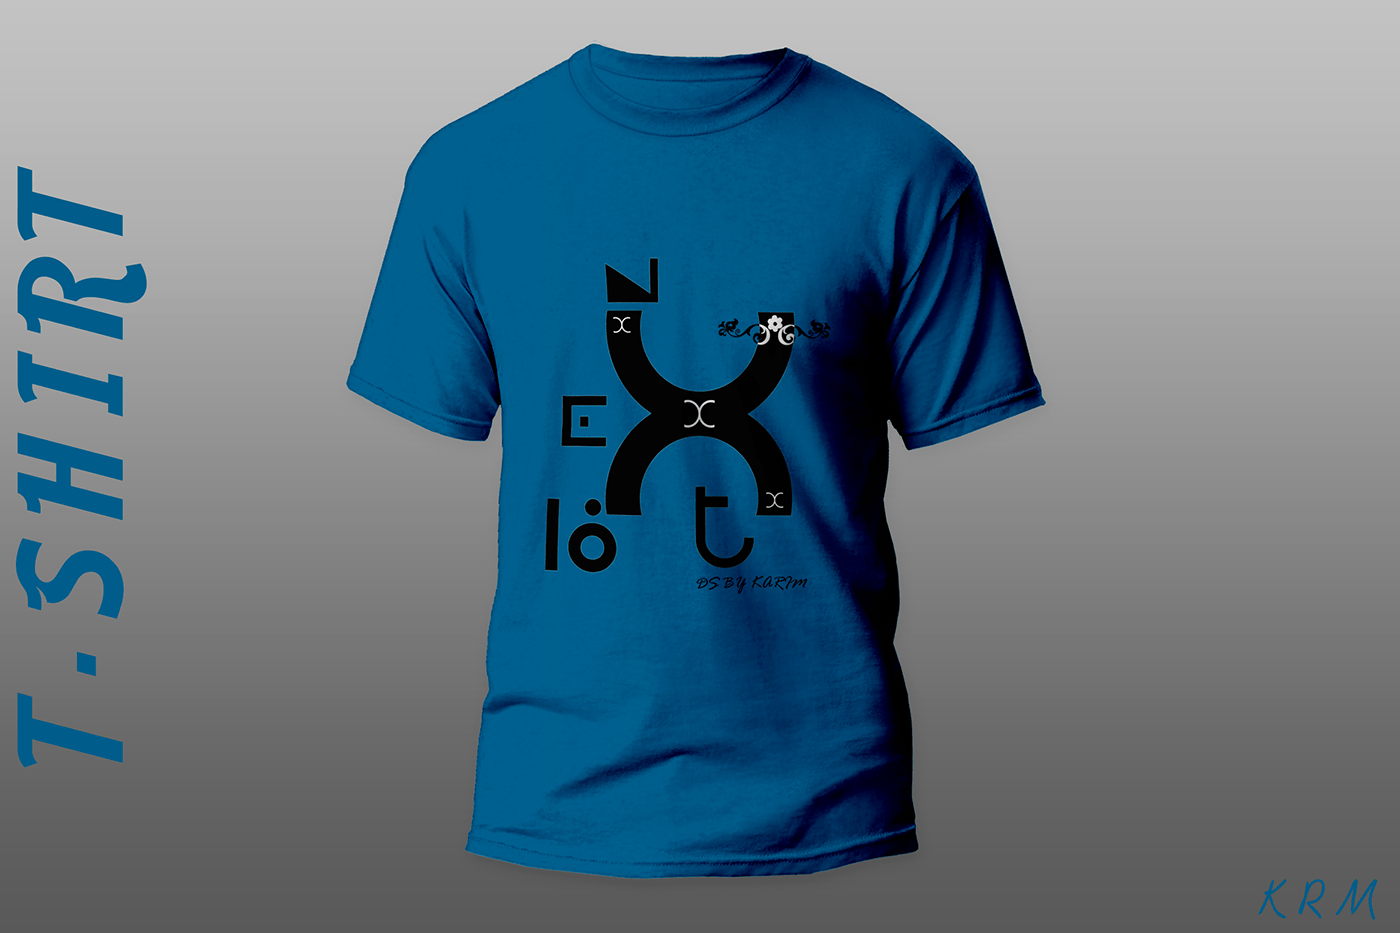 Typography T shirt Design
